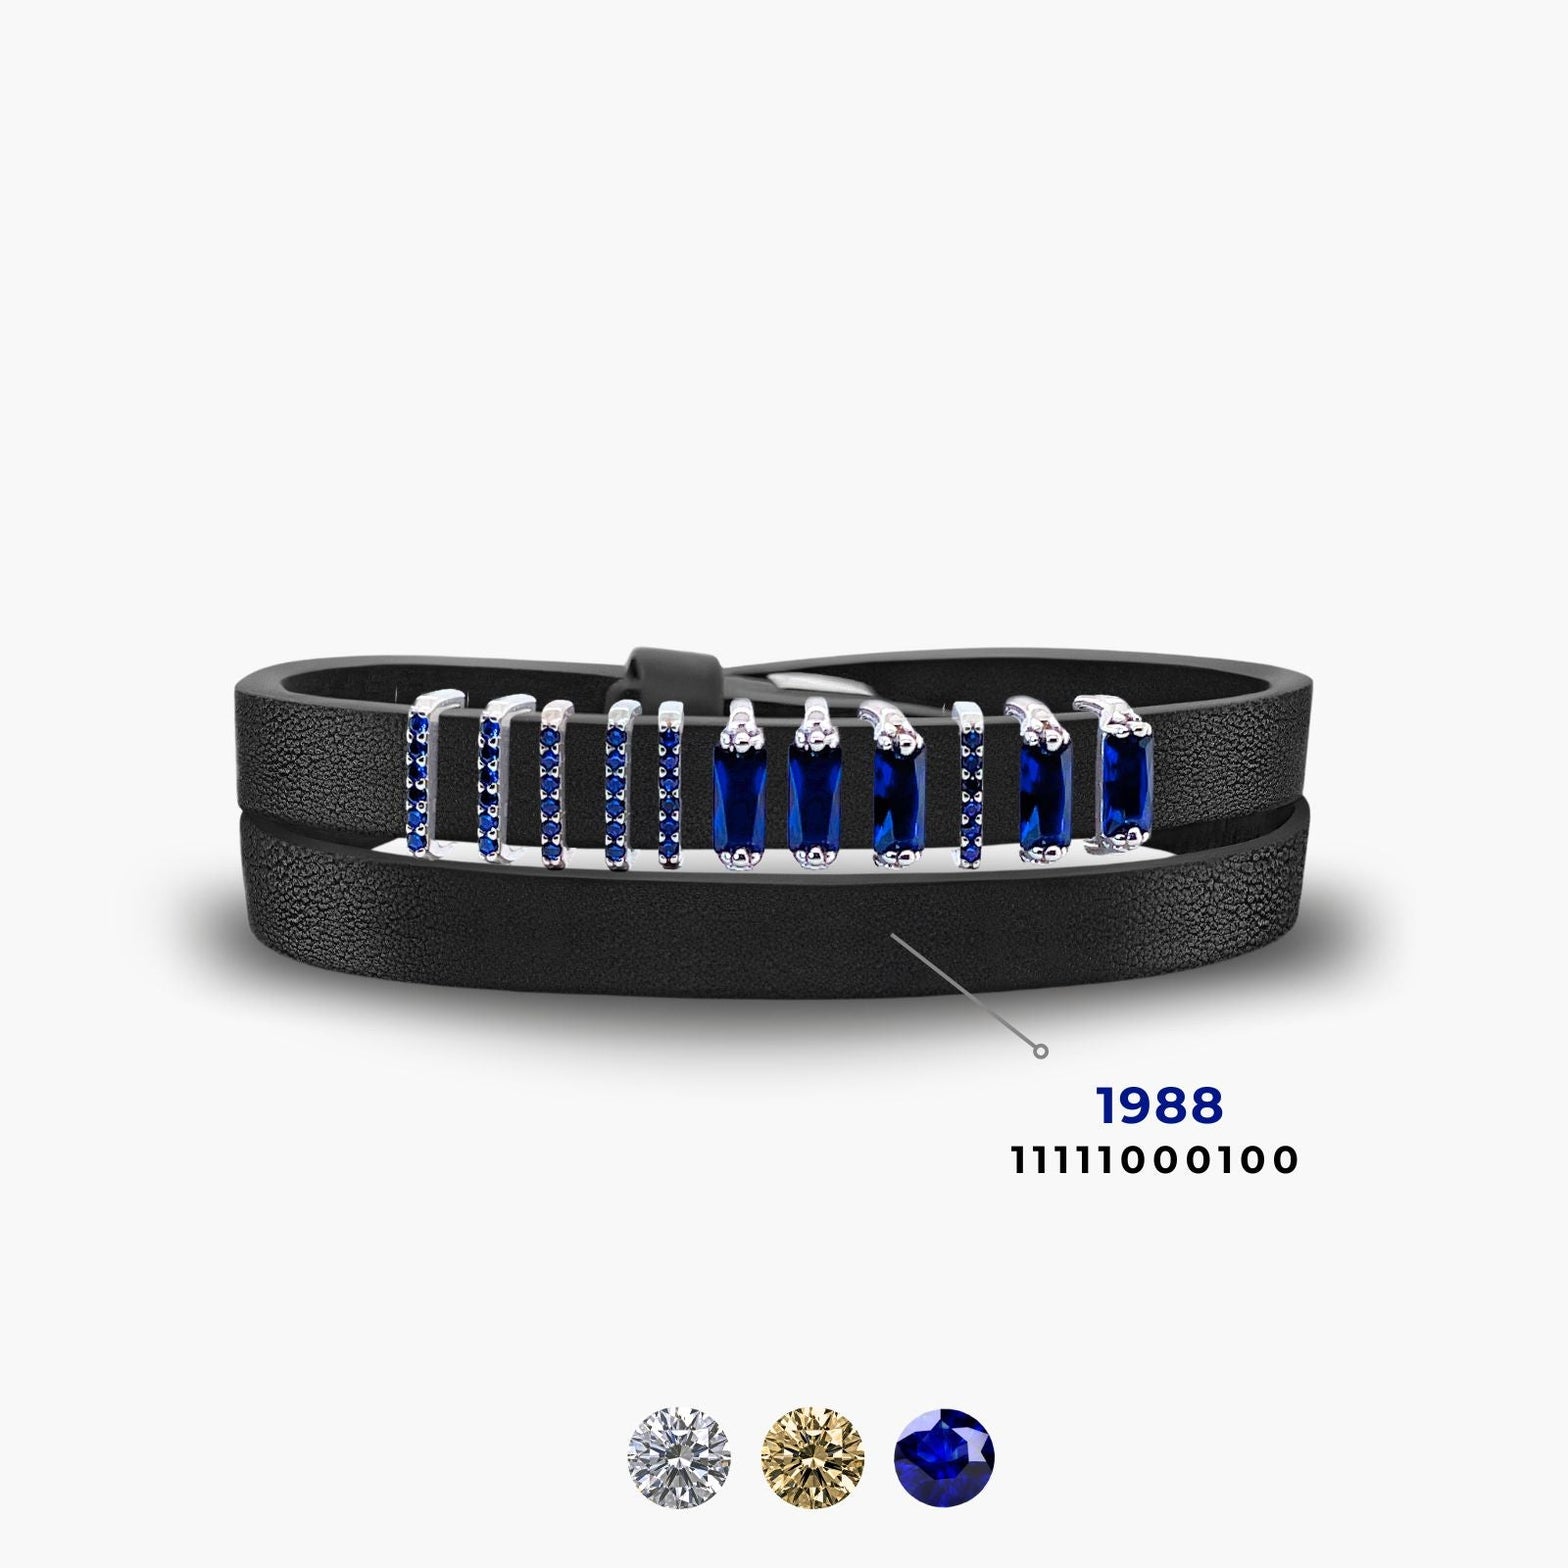 NightSky Charm Encoded Year Bracelet - Black Leather & Sapphire Charms